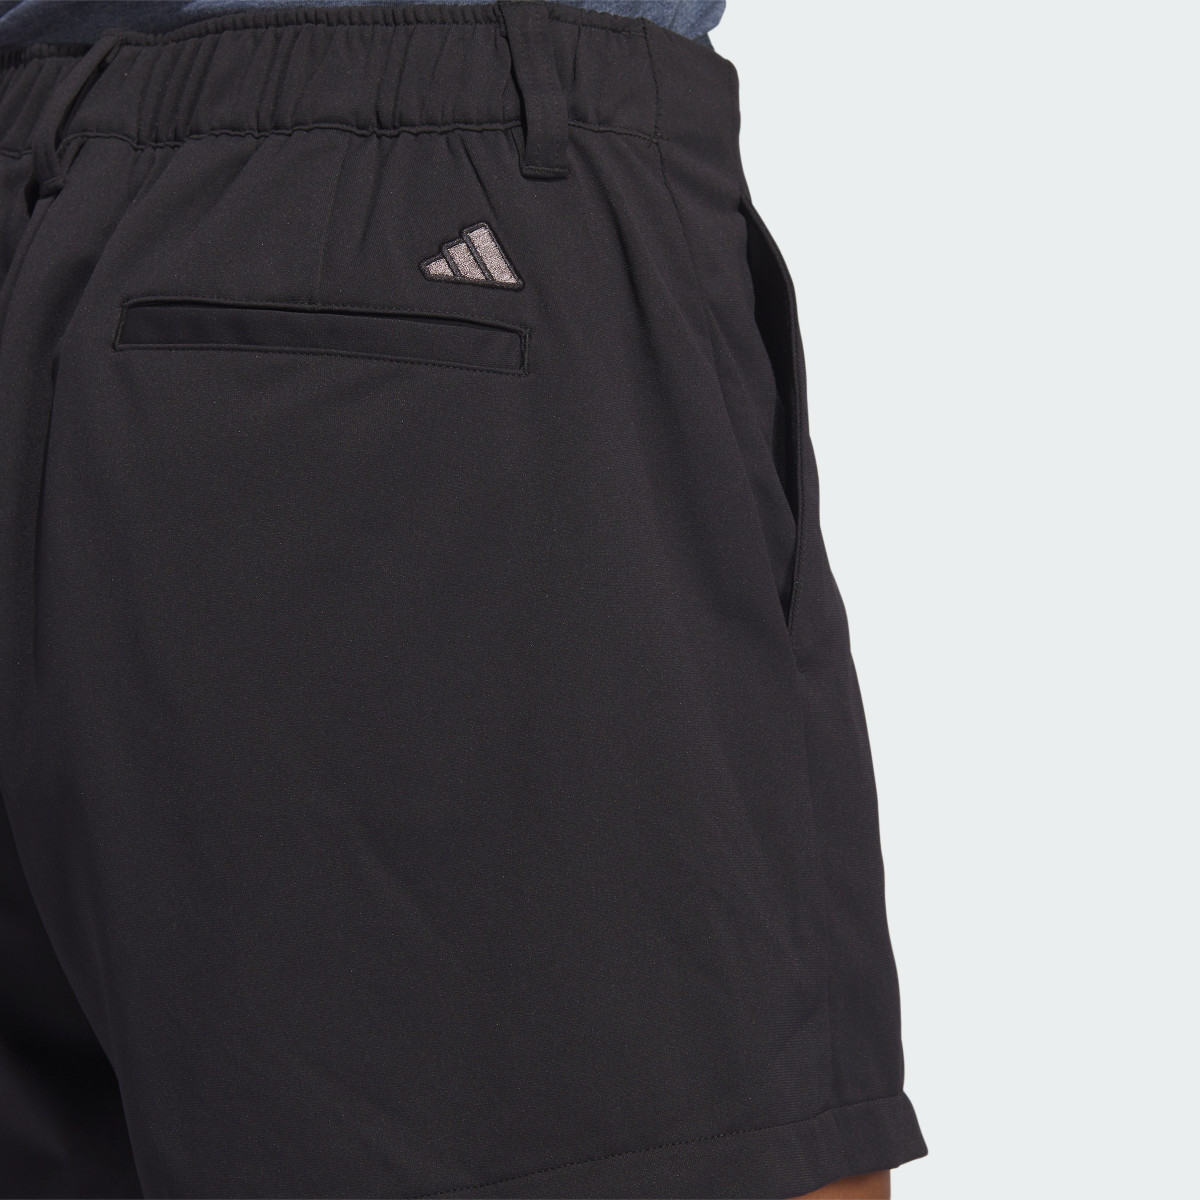 Adidas Go-To Pleated Shorts. 7